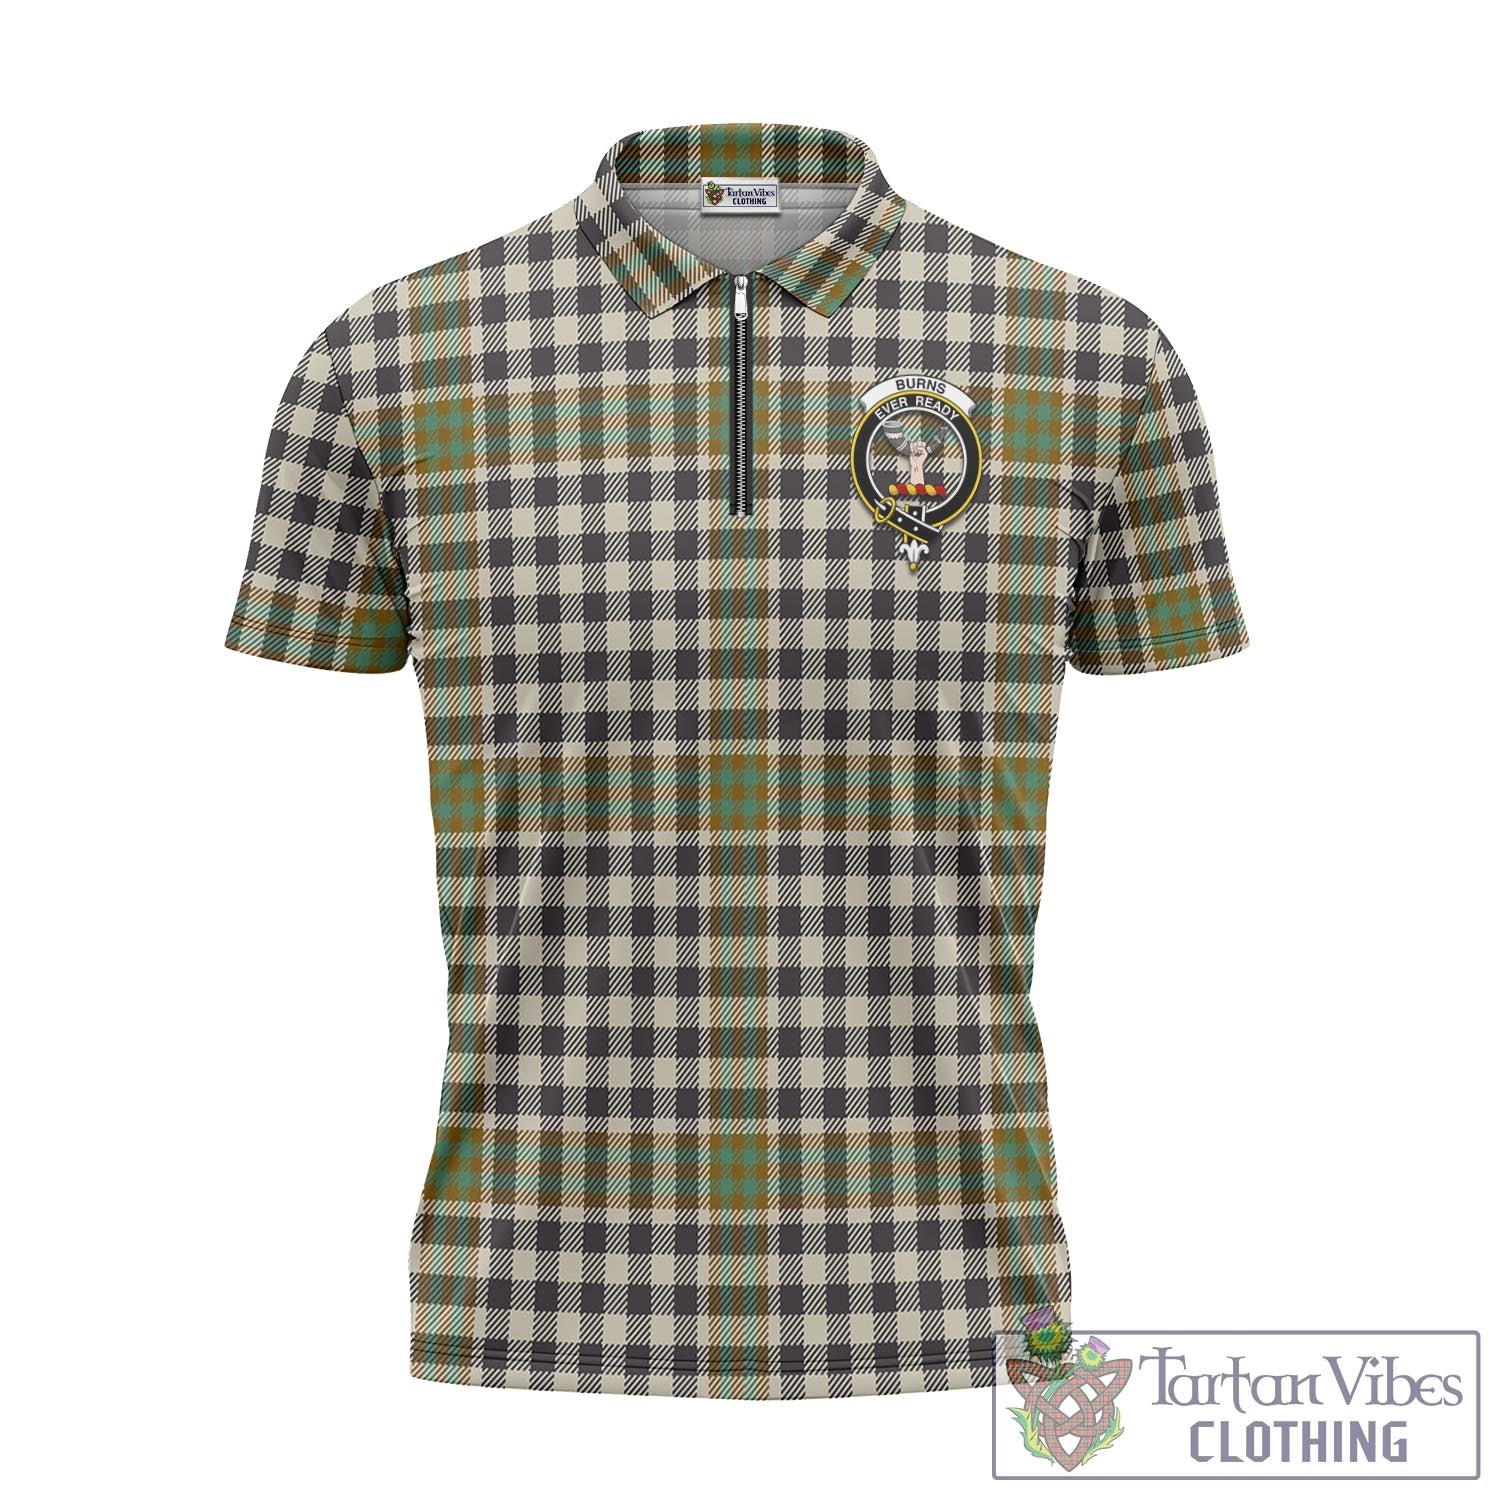 Tartan Vibes Clothing Burns Check Tartan Zipper Polo Shirt with Family Crest